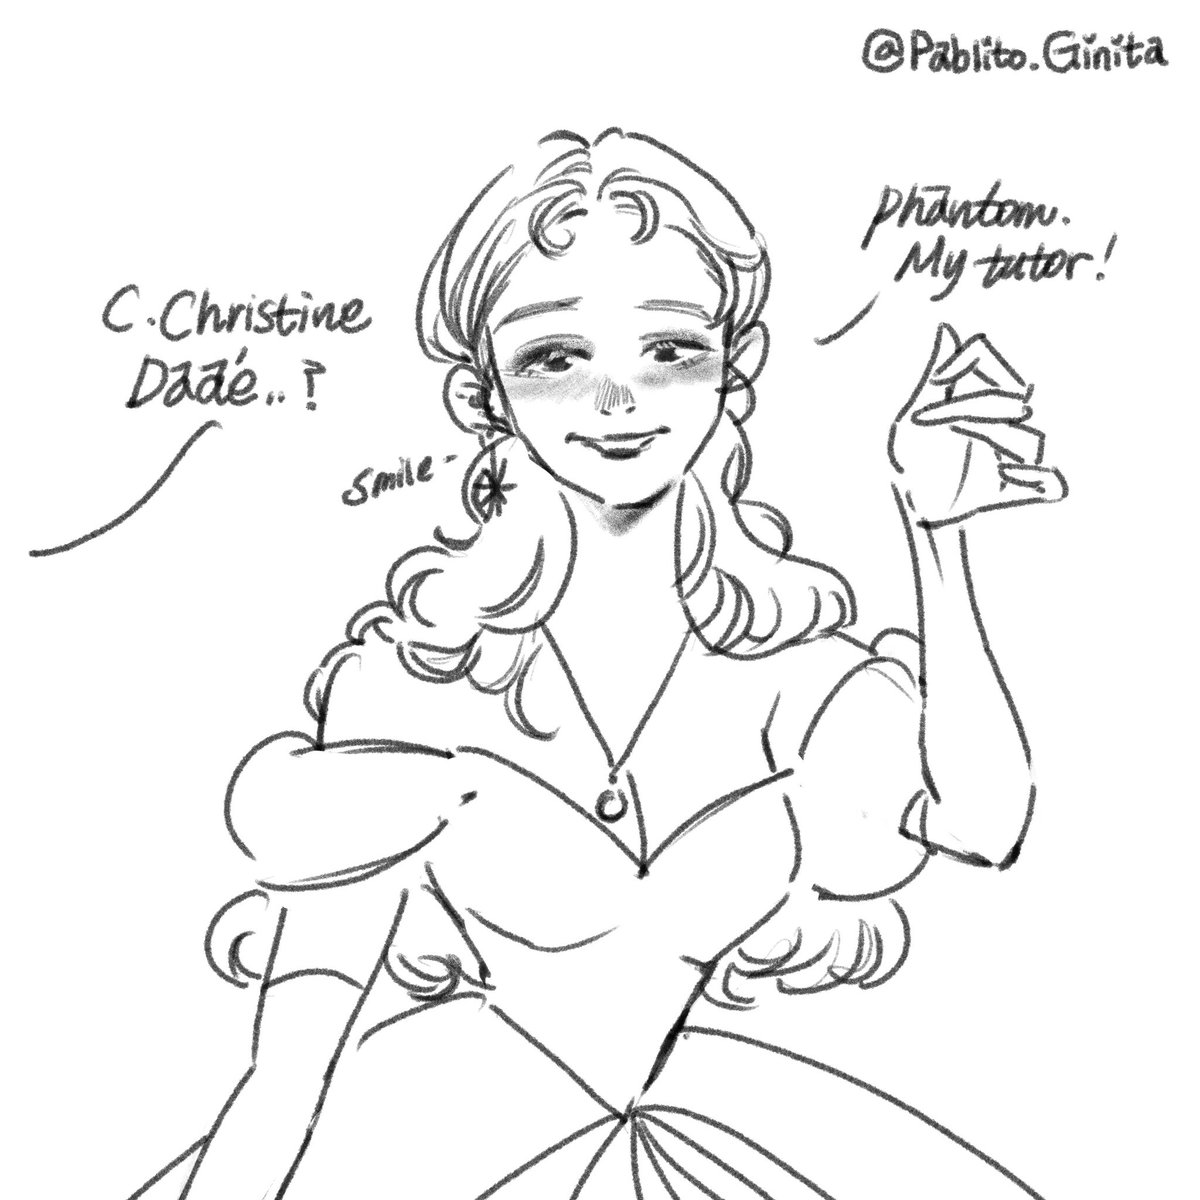 My music tutor

#ChristineDaeé #phantomoftheopera #illustration #musicalshow #pablitoandginita   #파블리또앤지니따_오프더레코드  #파블리또앤지니따